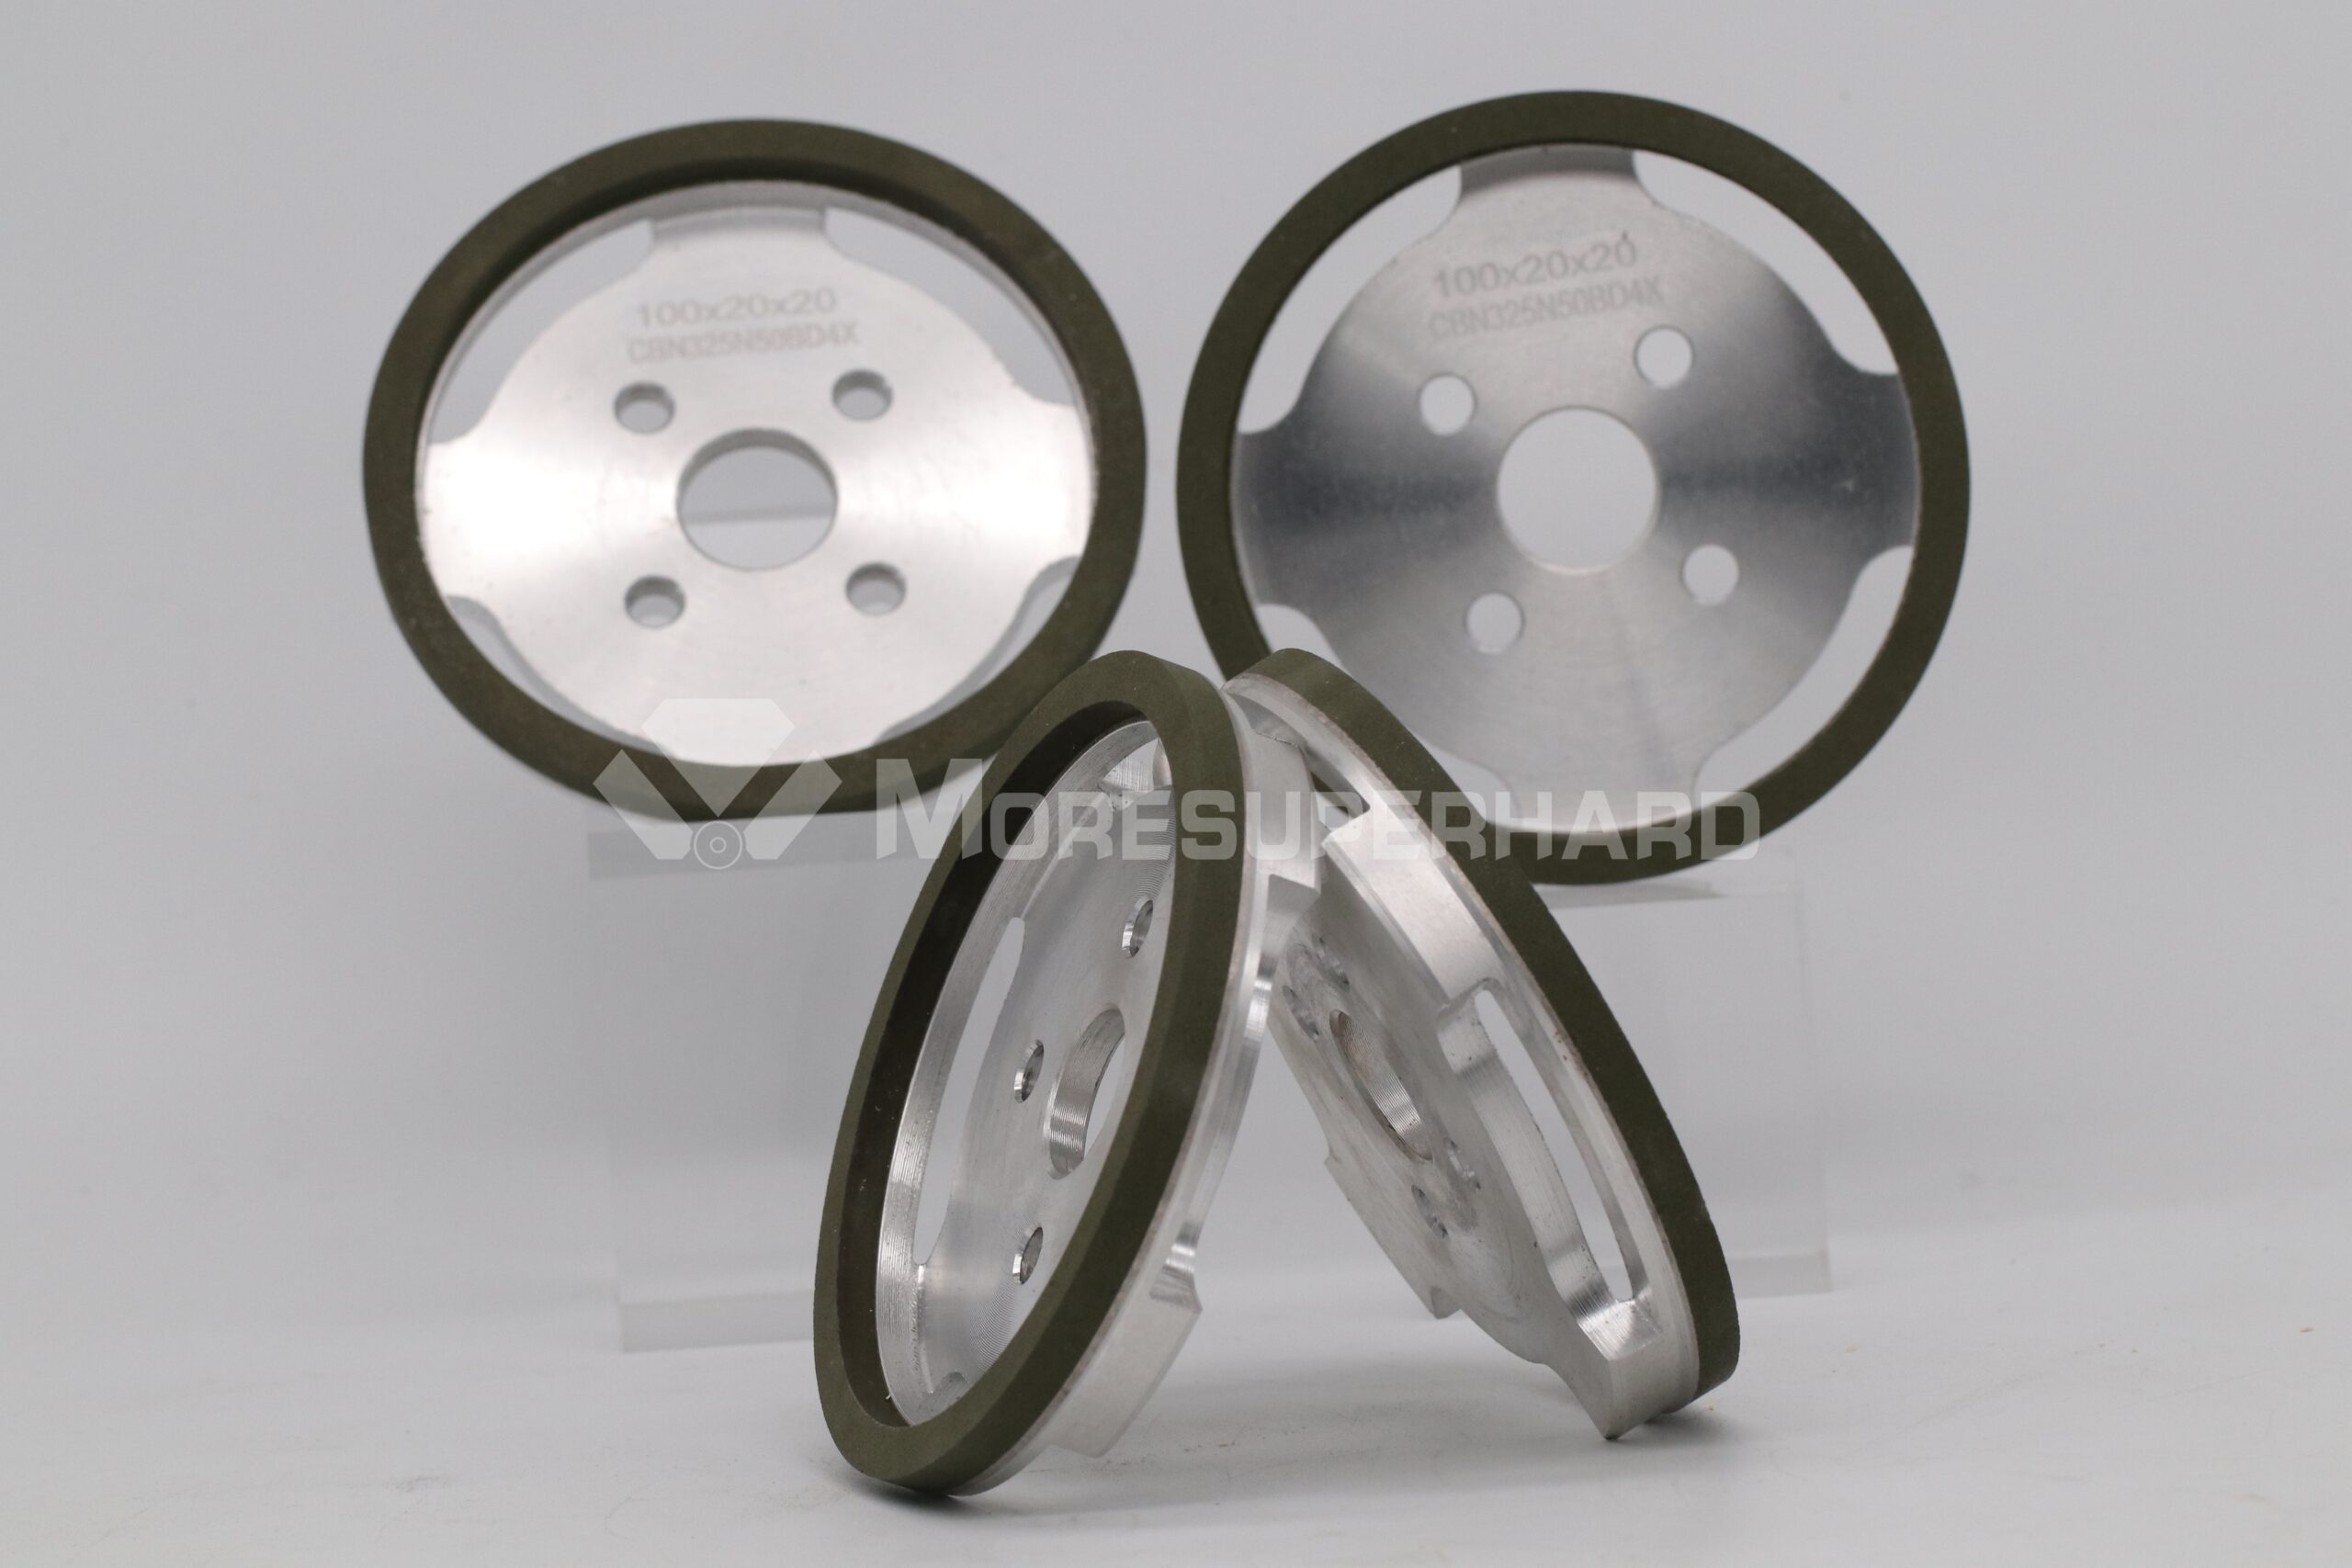 Resin Bonded Cbn Grinding Wheel Customize size Hardness superhard